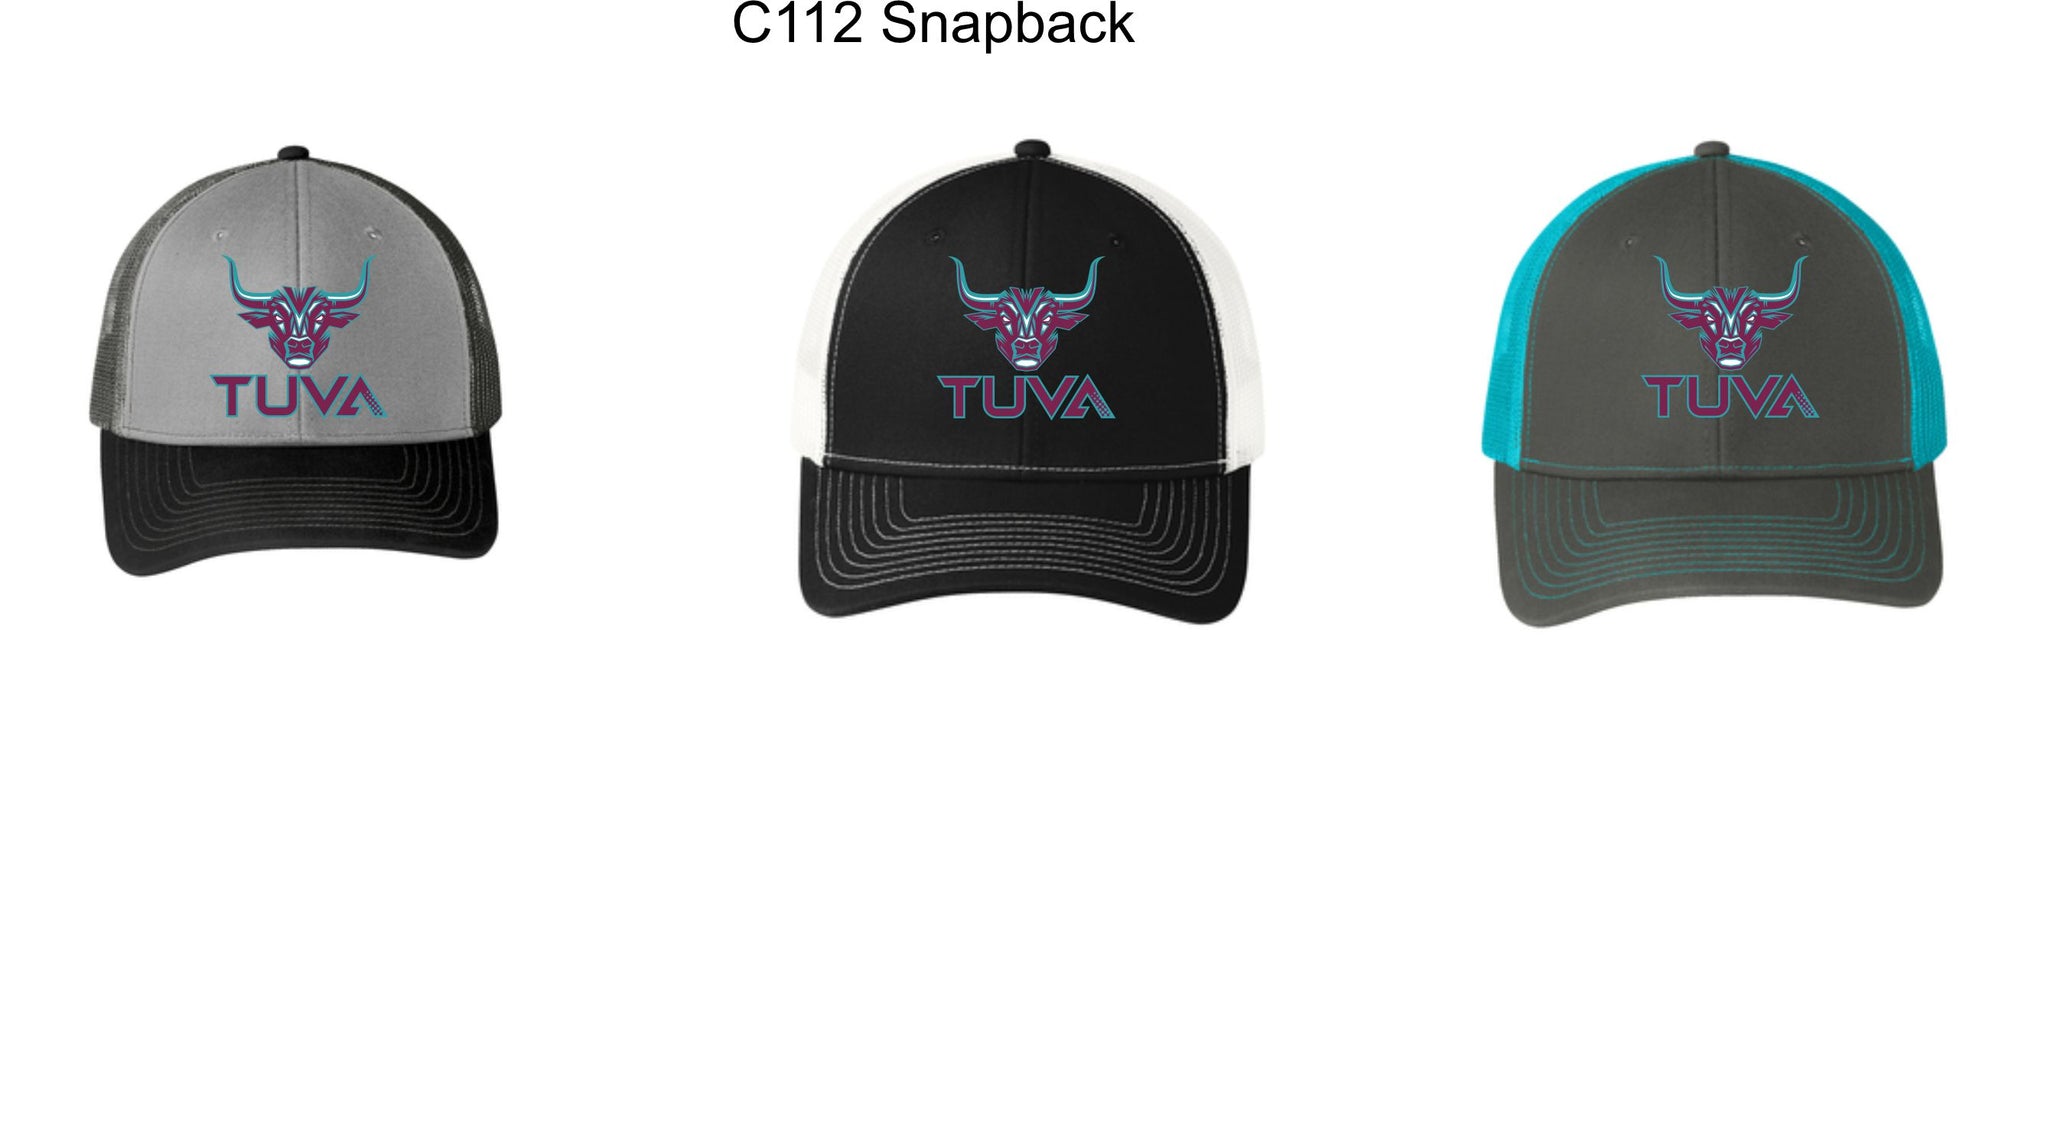 TUVA - Trucker Snap-back hats